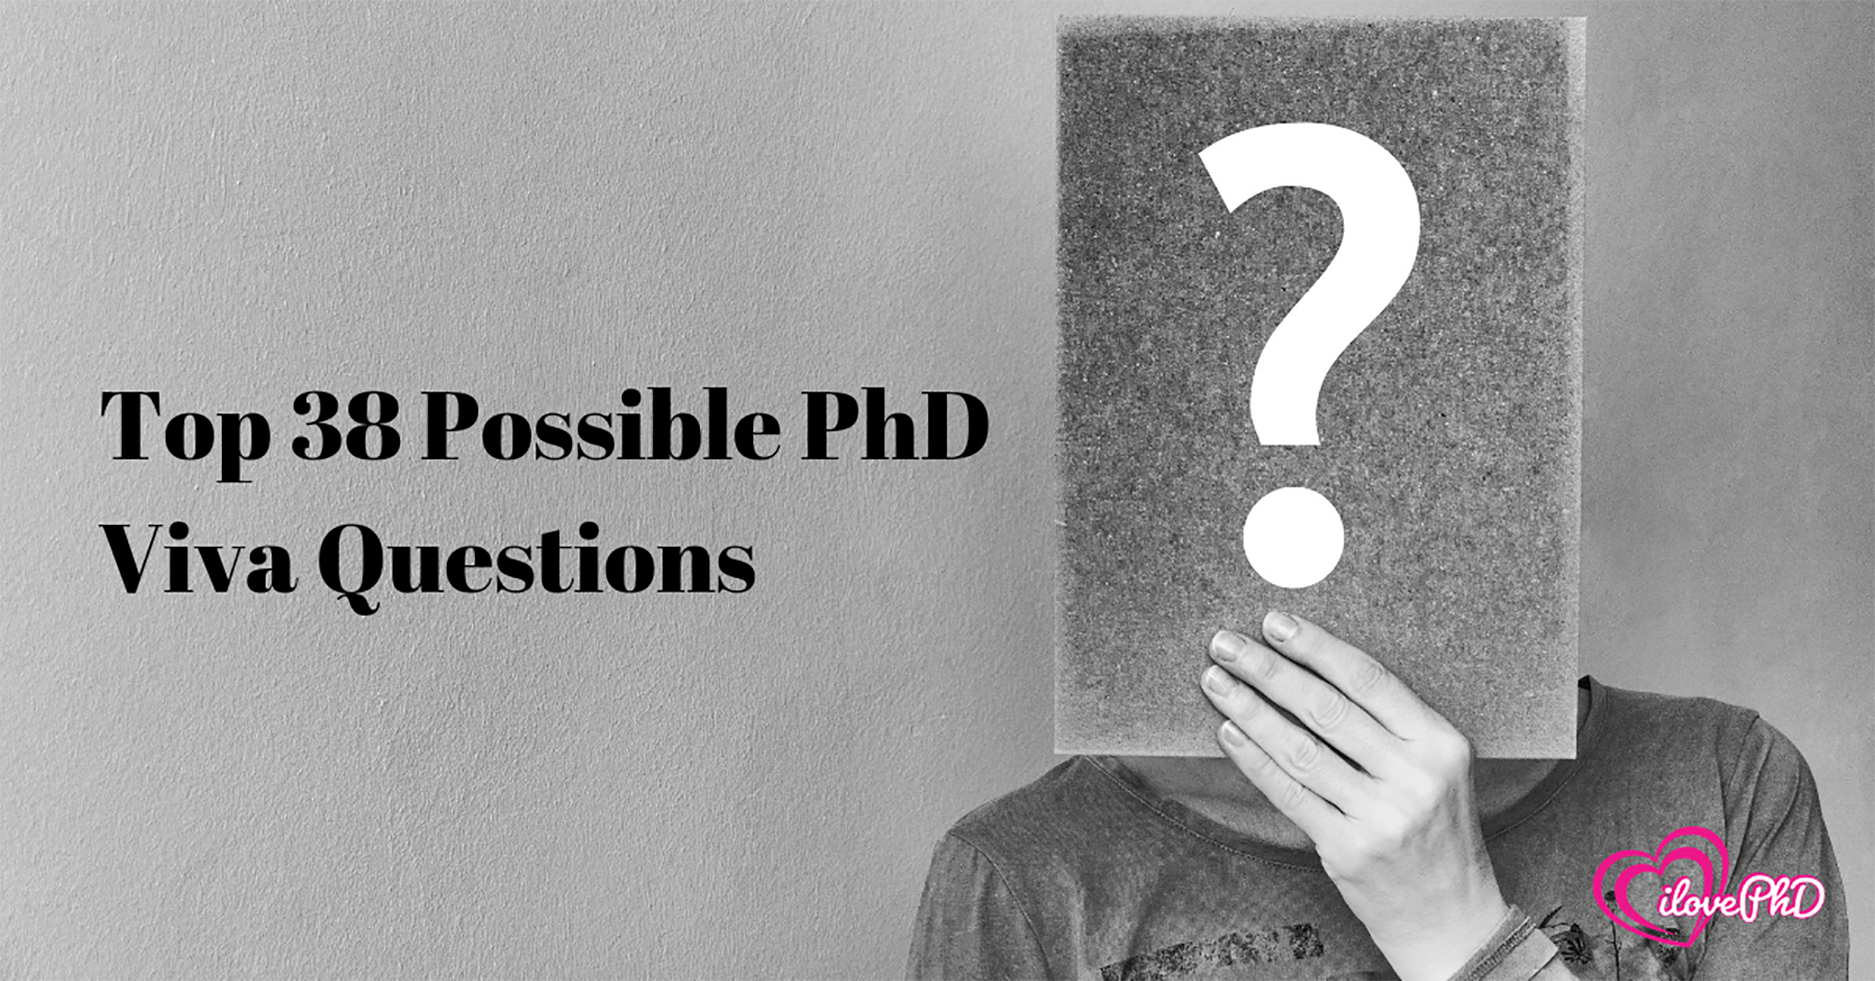 Top 38 Possible PhD Viva Questions